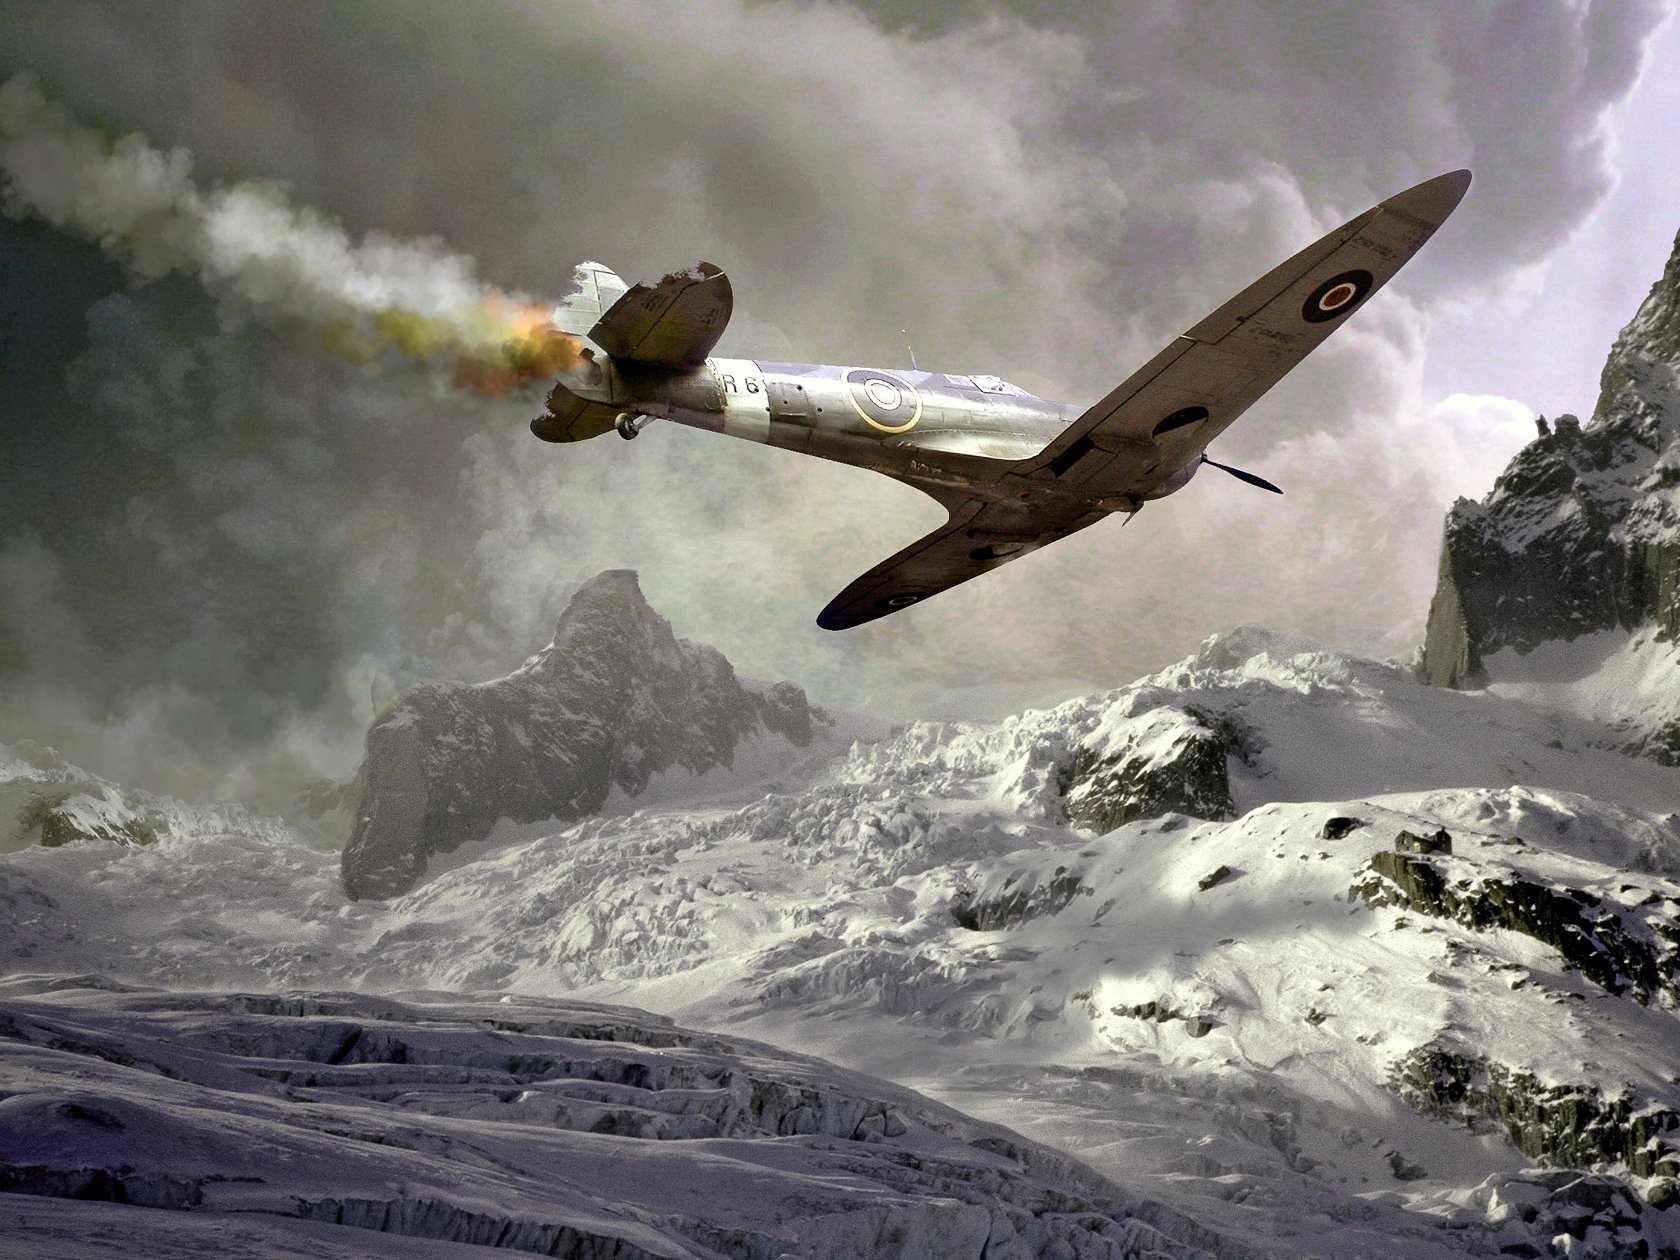 spitfire shot down plane smoke fall accident war mountain snow ...